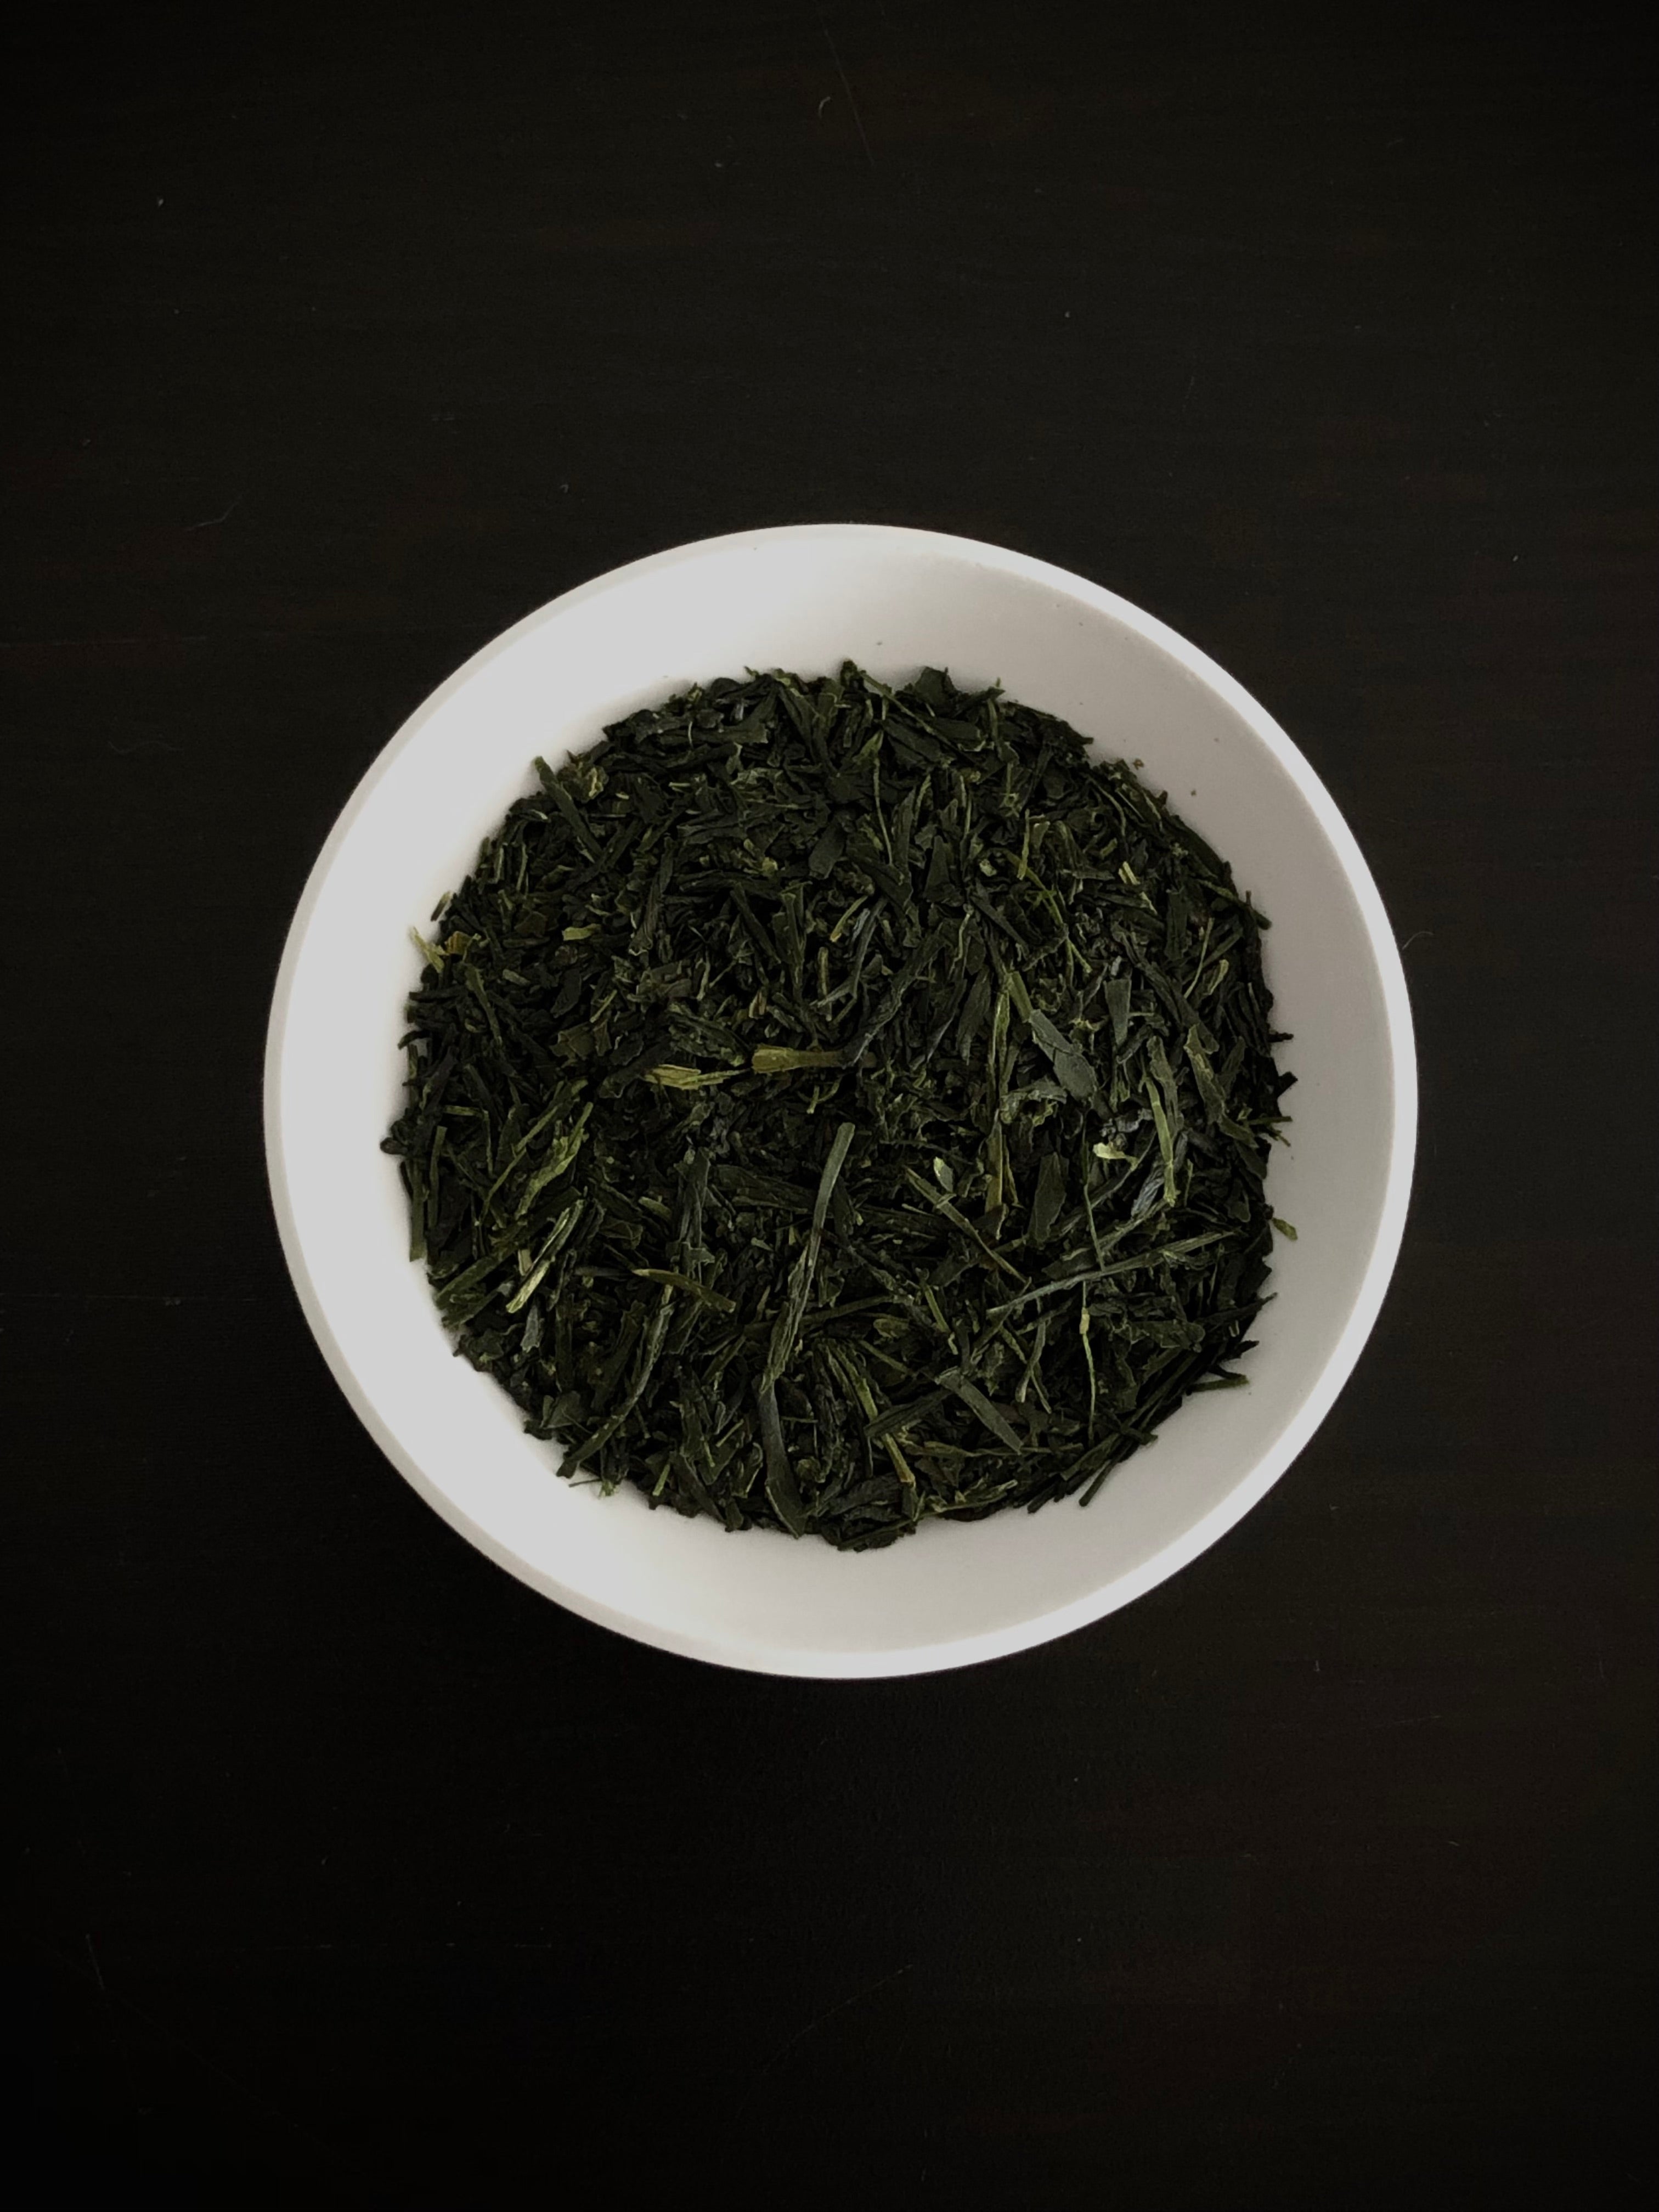 Yukifuruyama sencha green tea loose leaf from Yame Fukuoka sold by Sabo Tea Australia in 30g satchel – Chiyonoen